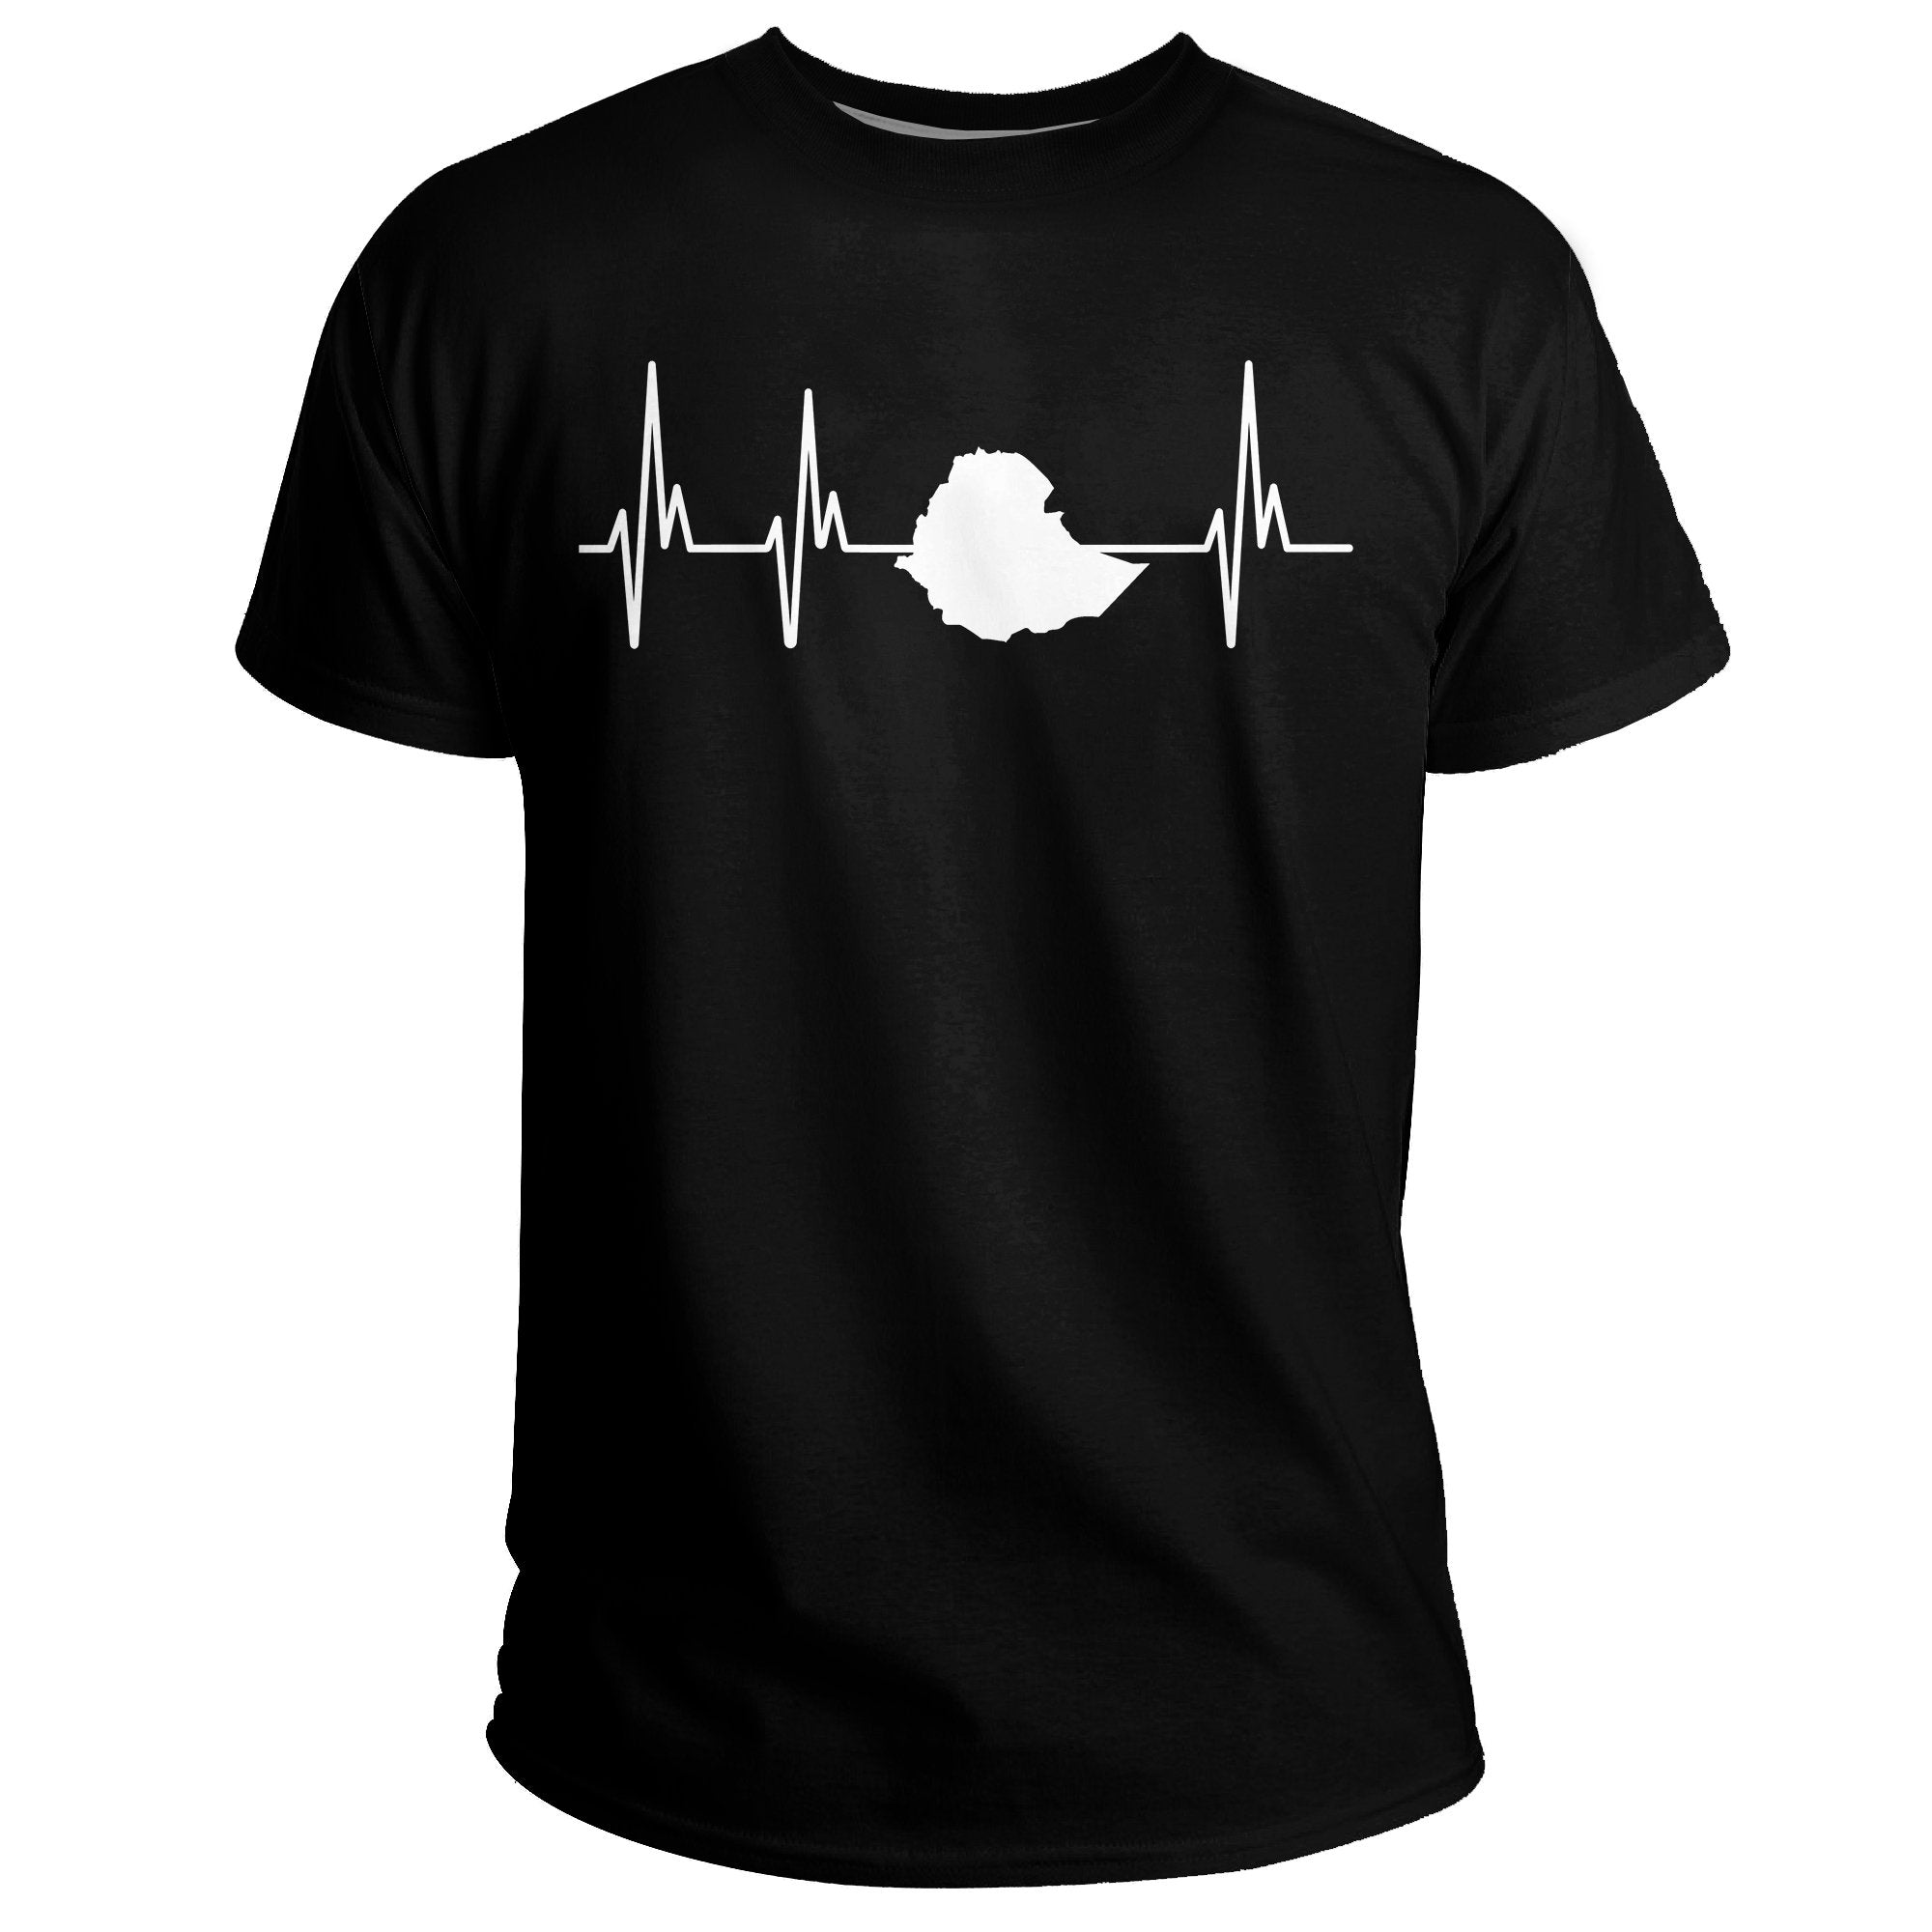 ethiopia-t-shirt-heartbeat